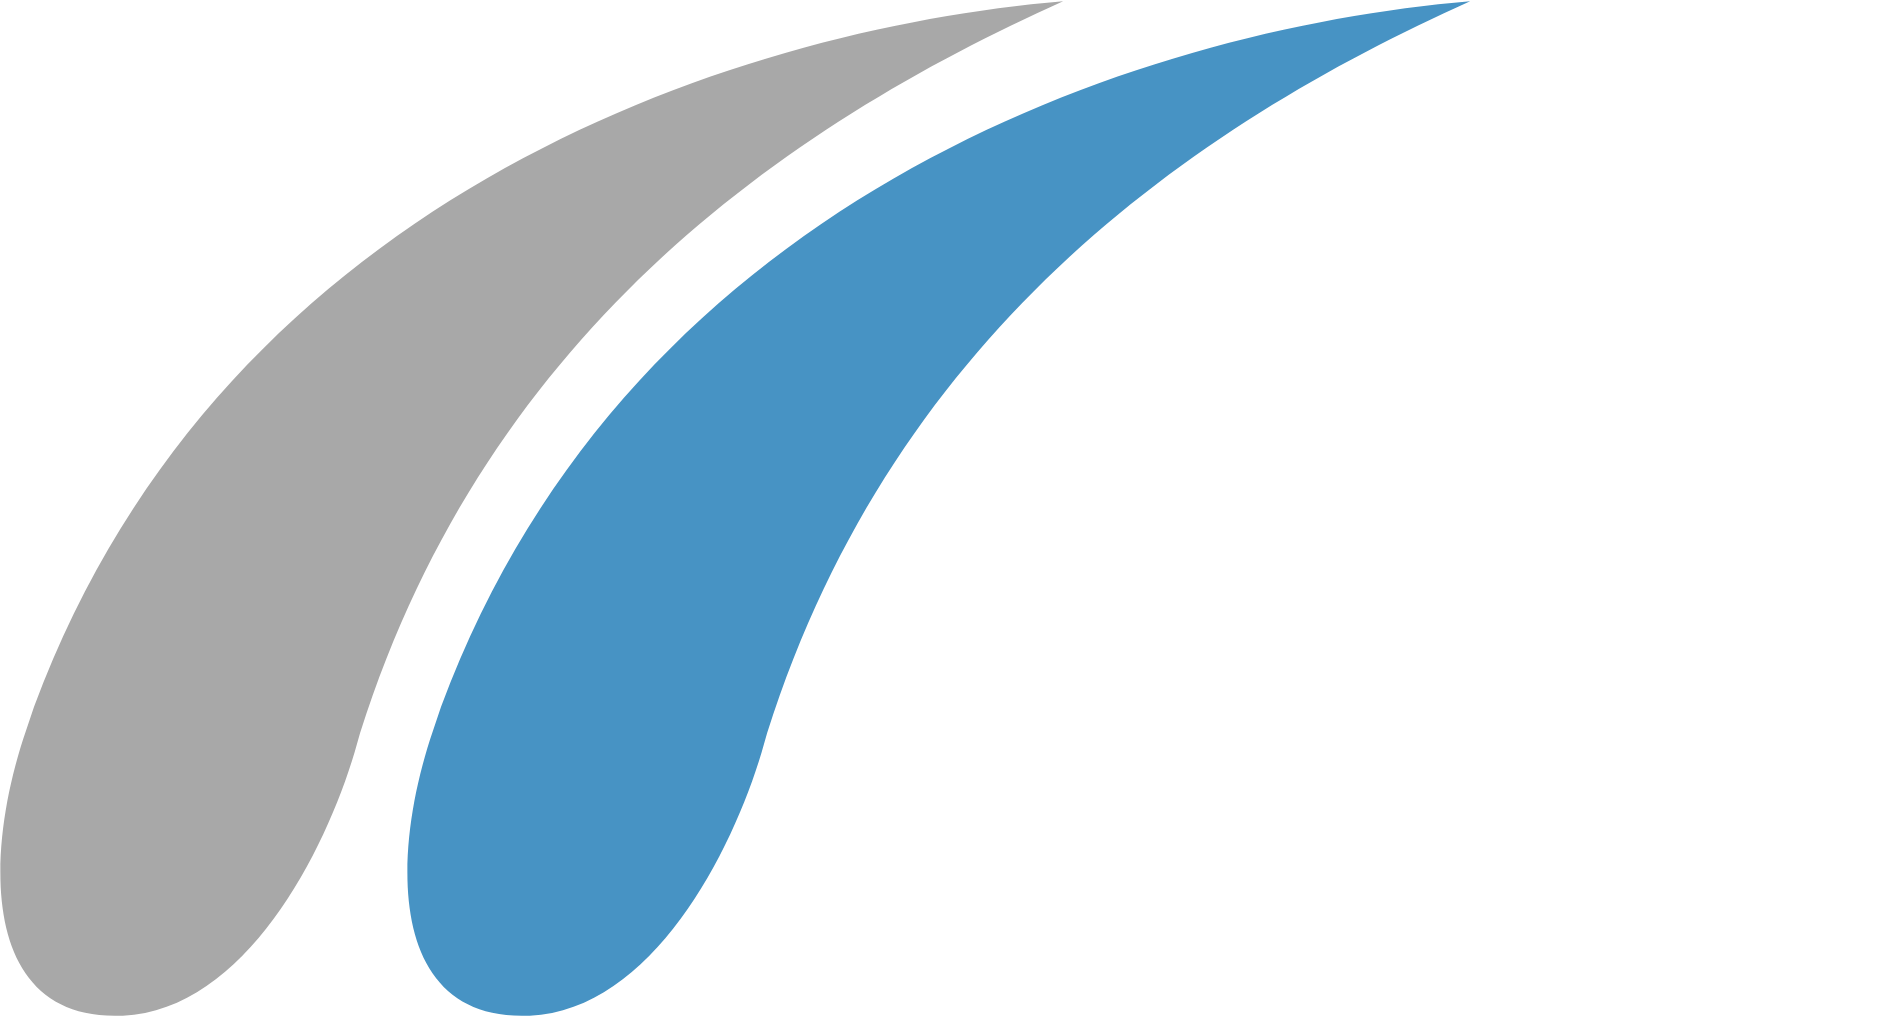 Mechel PAO logo for dark backgrounds (transparent PNG)